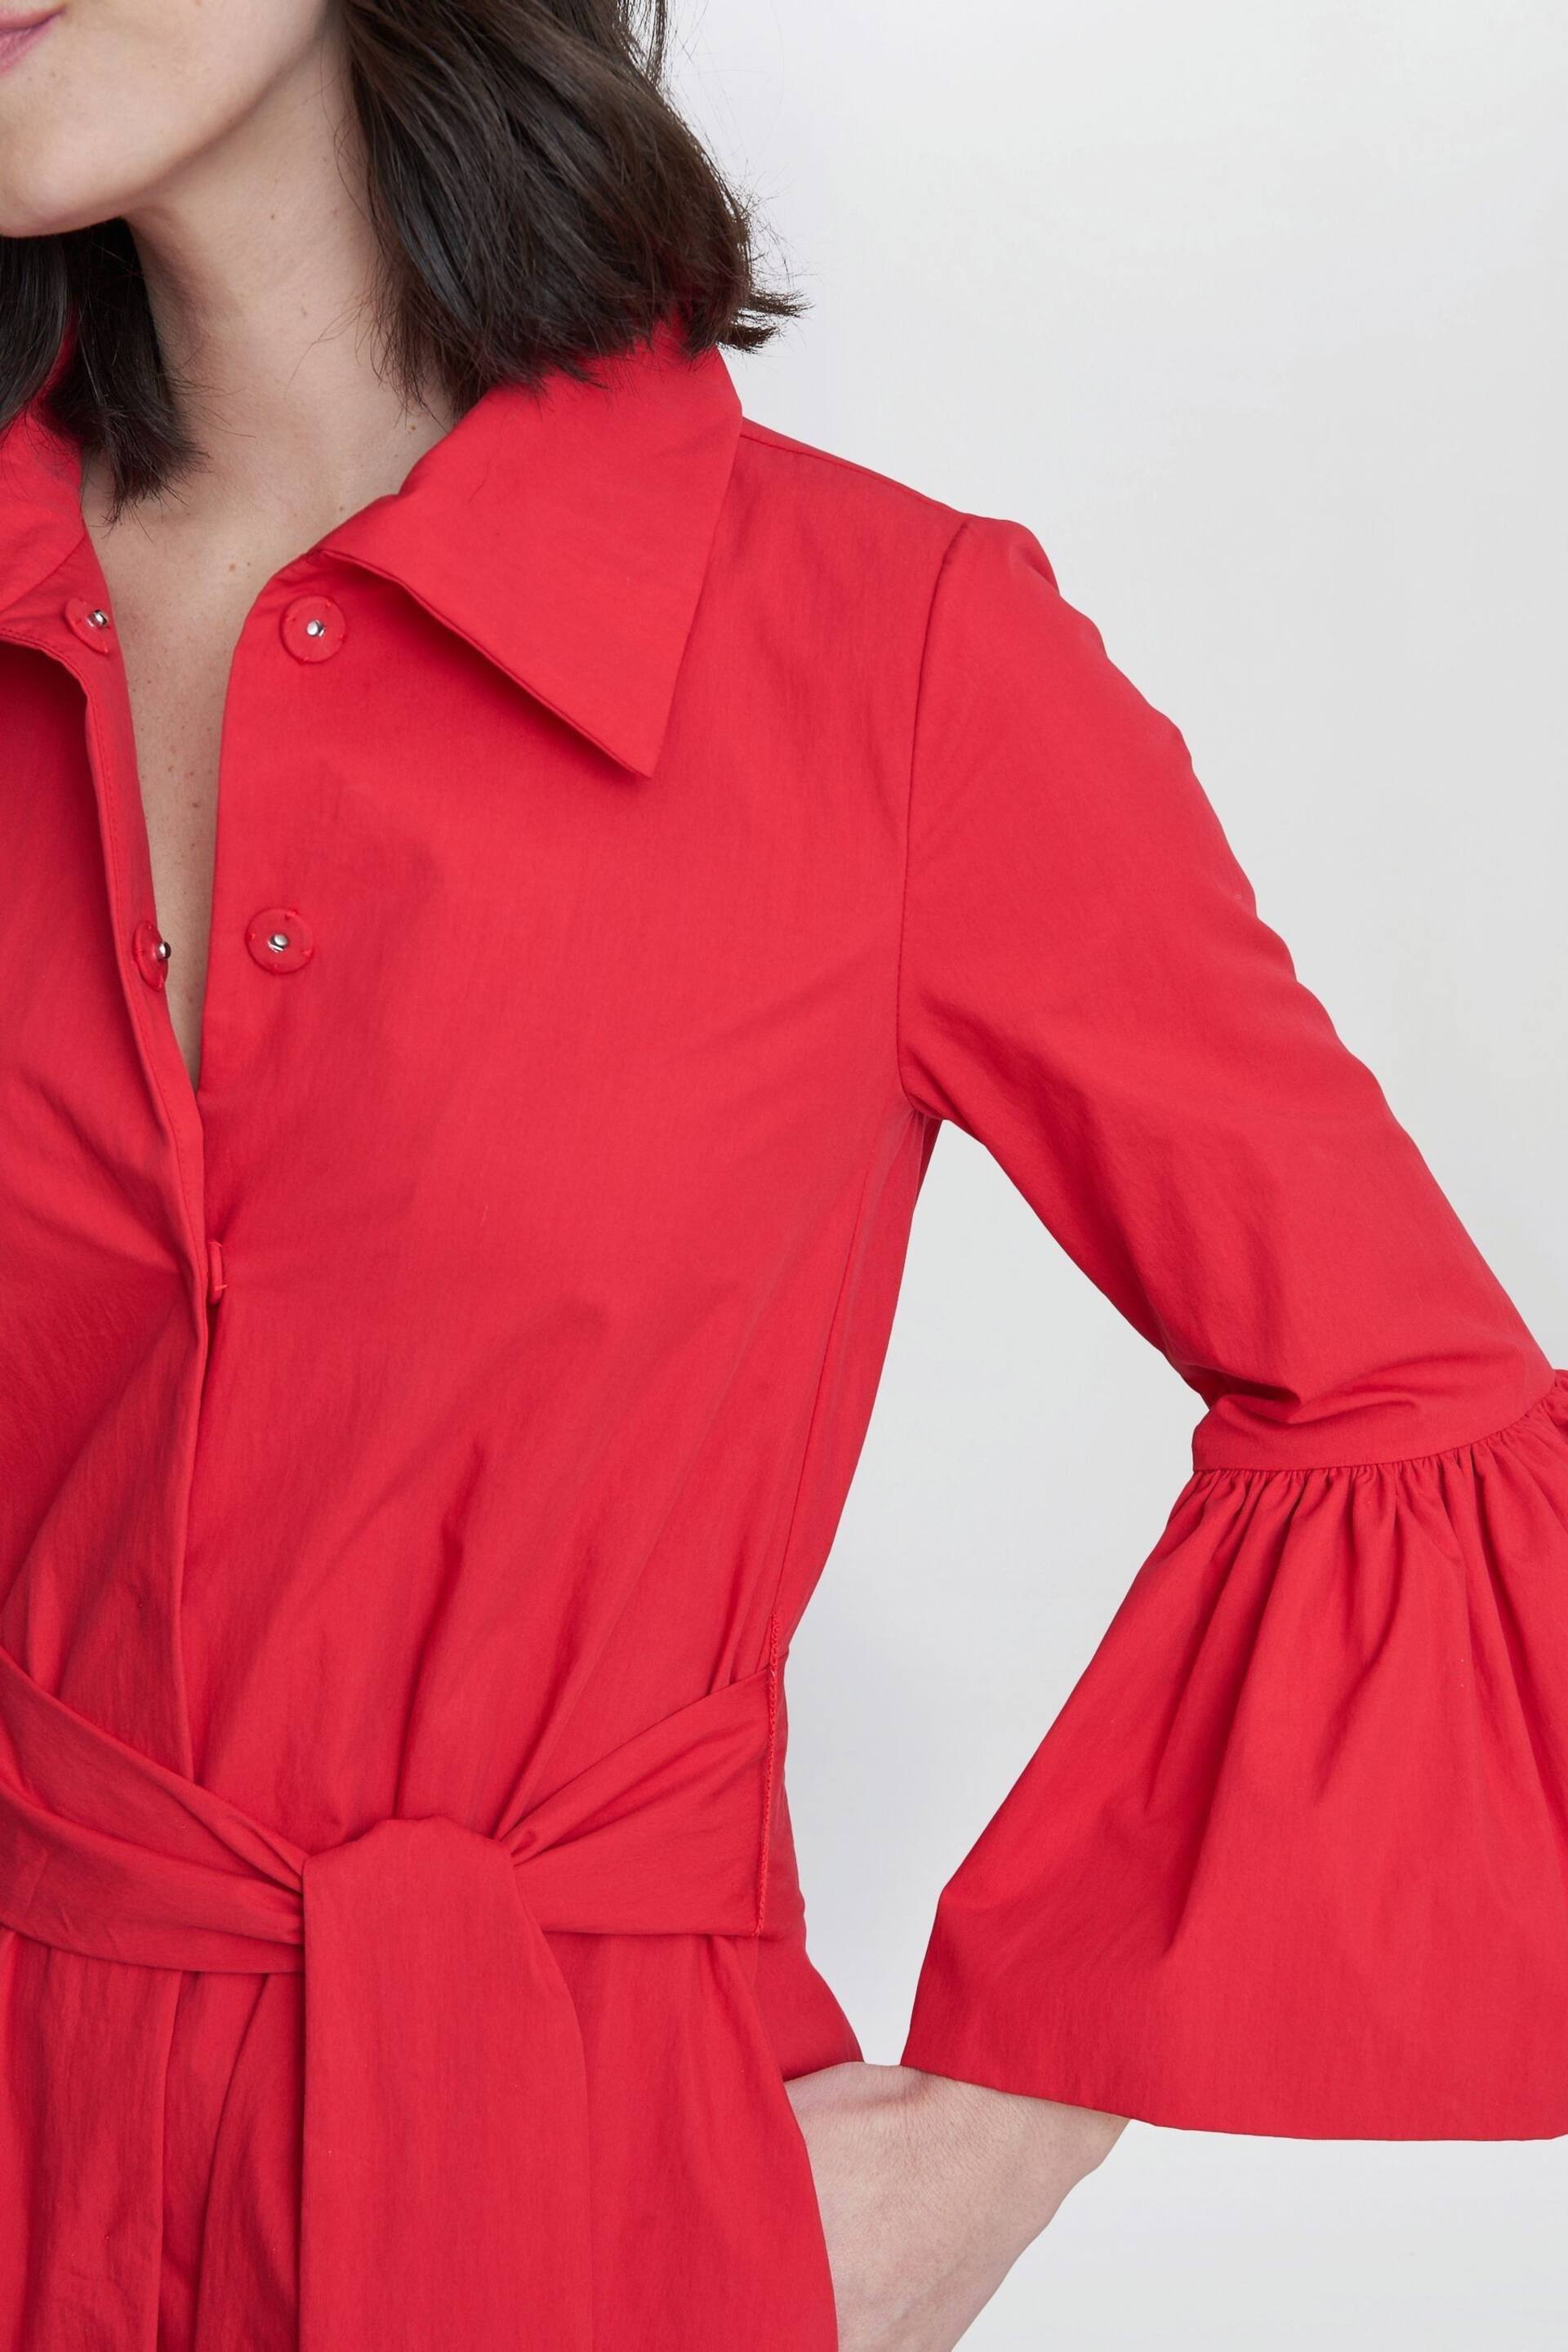 Gina Bacconi Red Melinda Taffeta Shirt Dress - Image 4 of 6